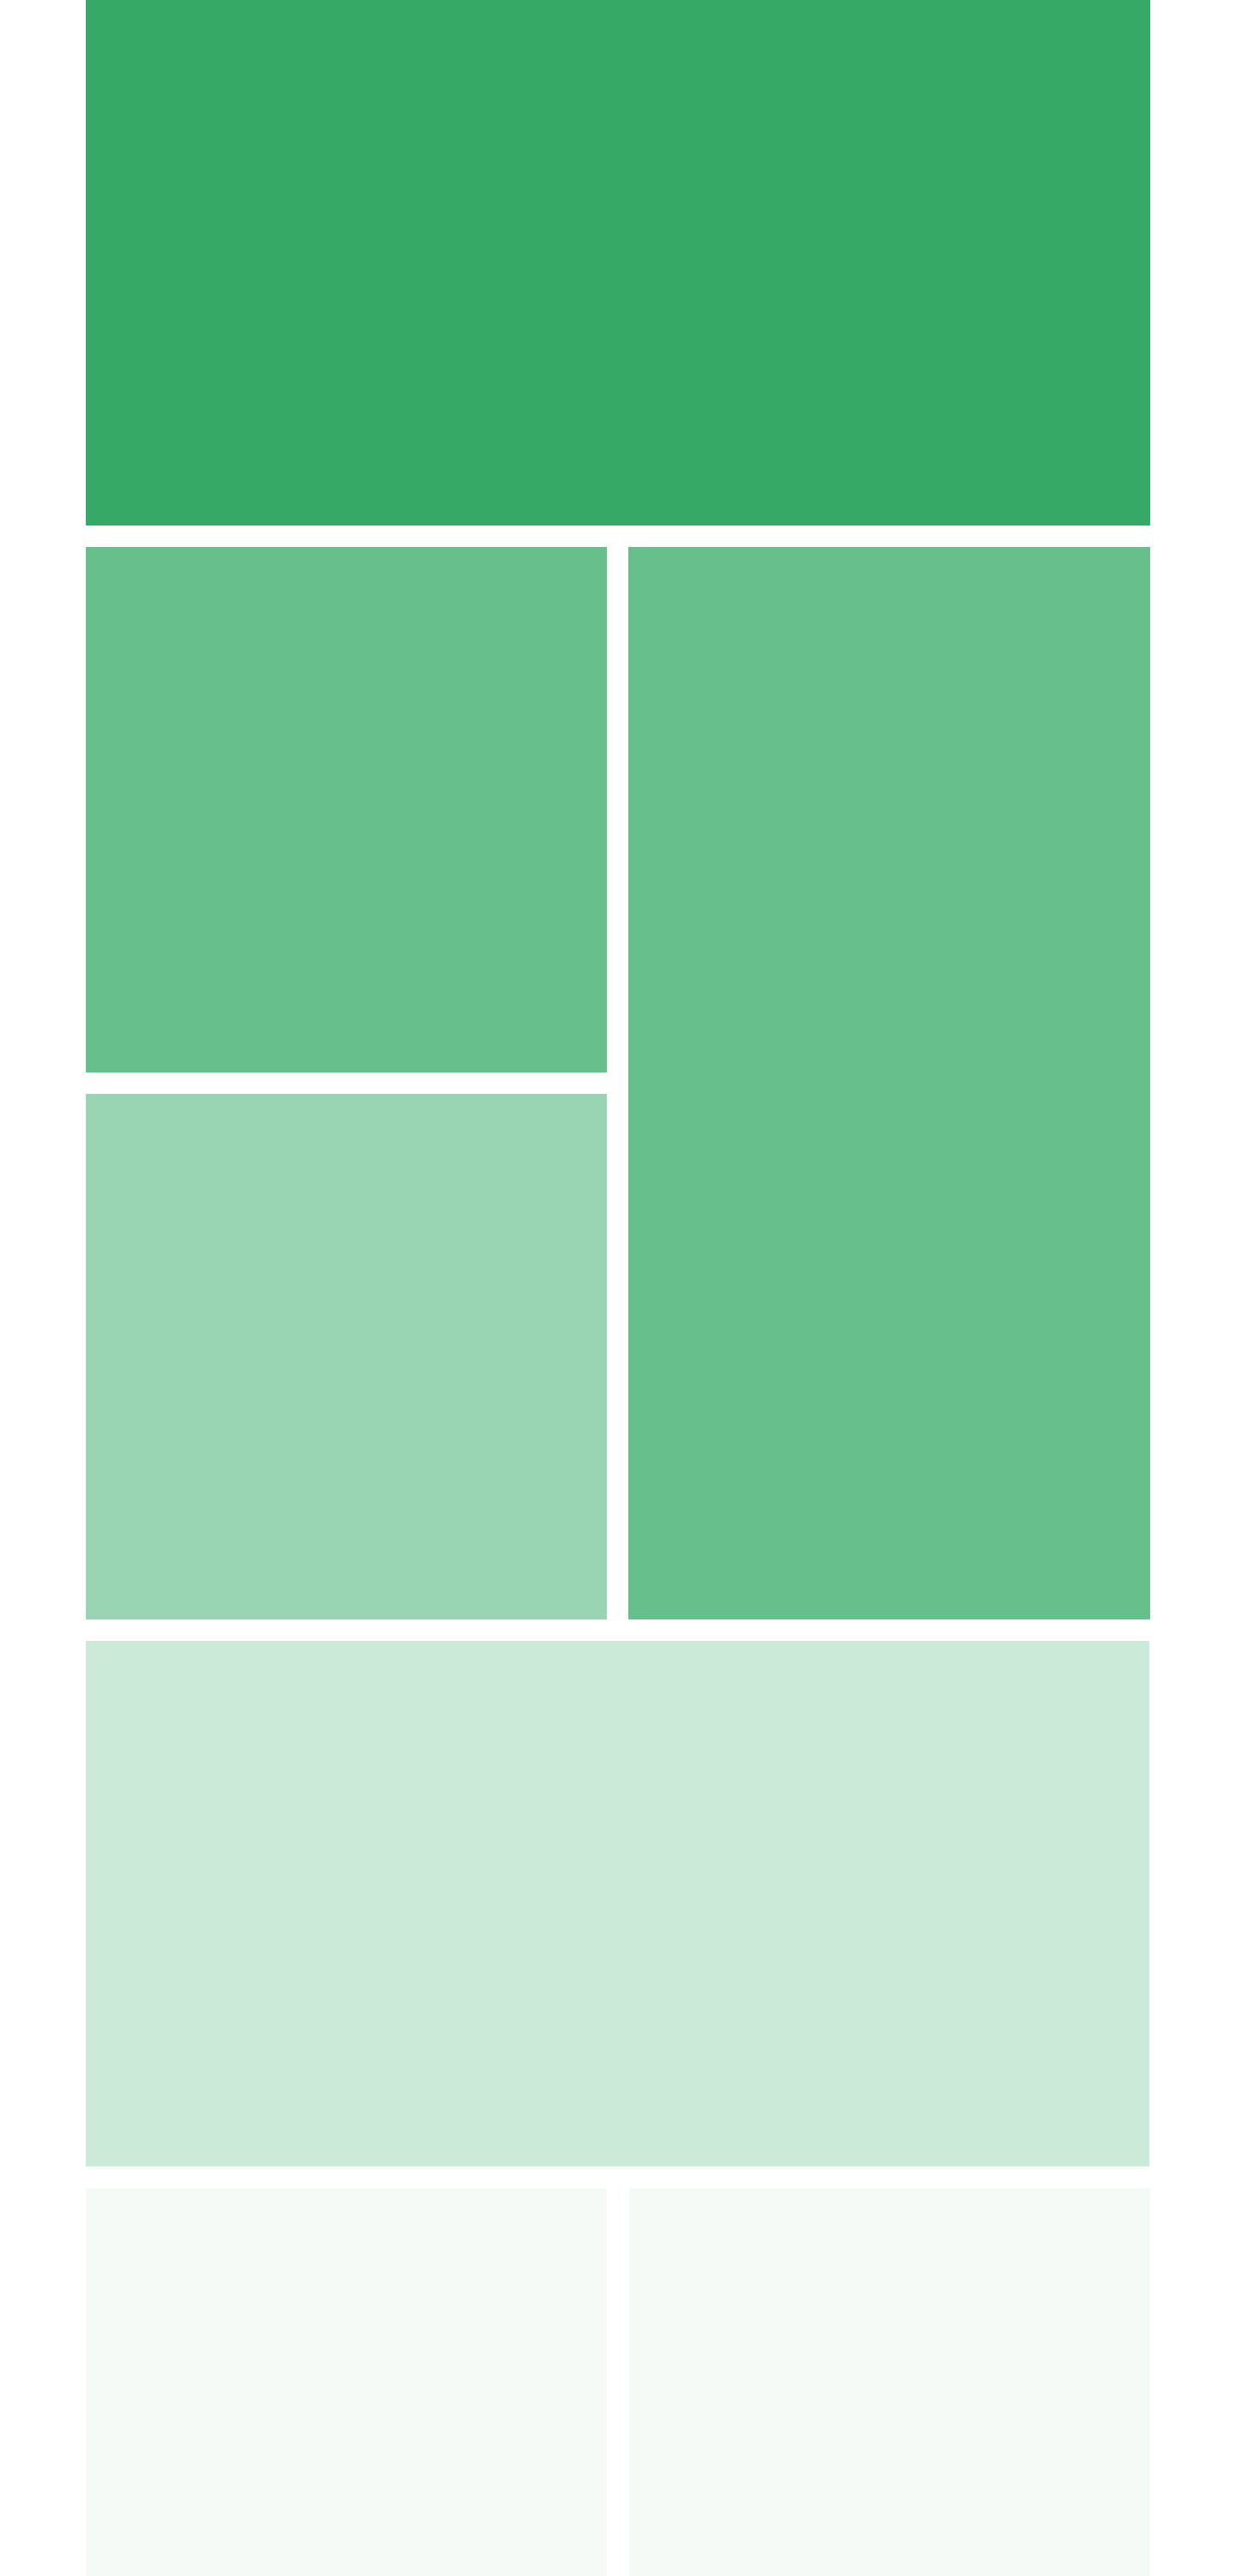 green blocks on a grid